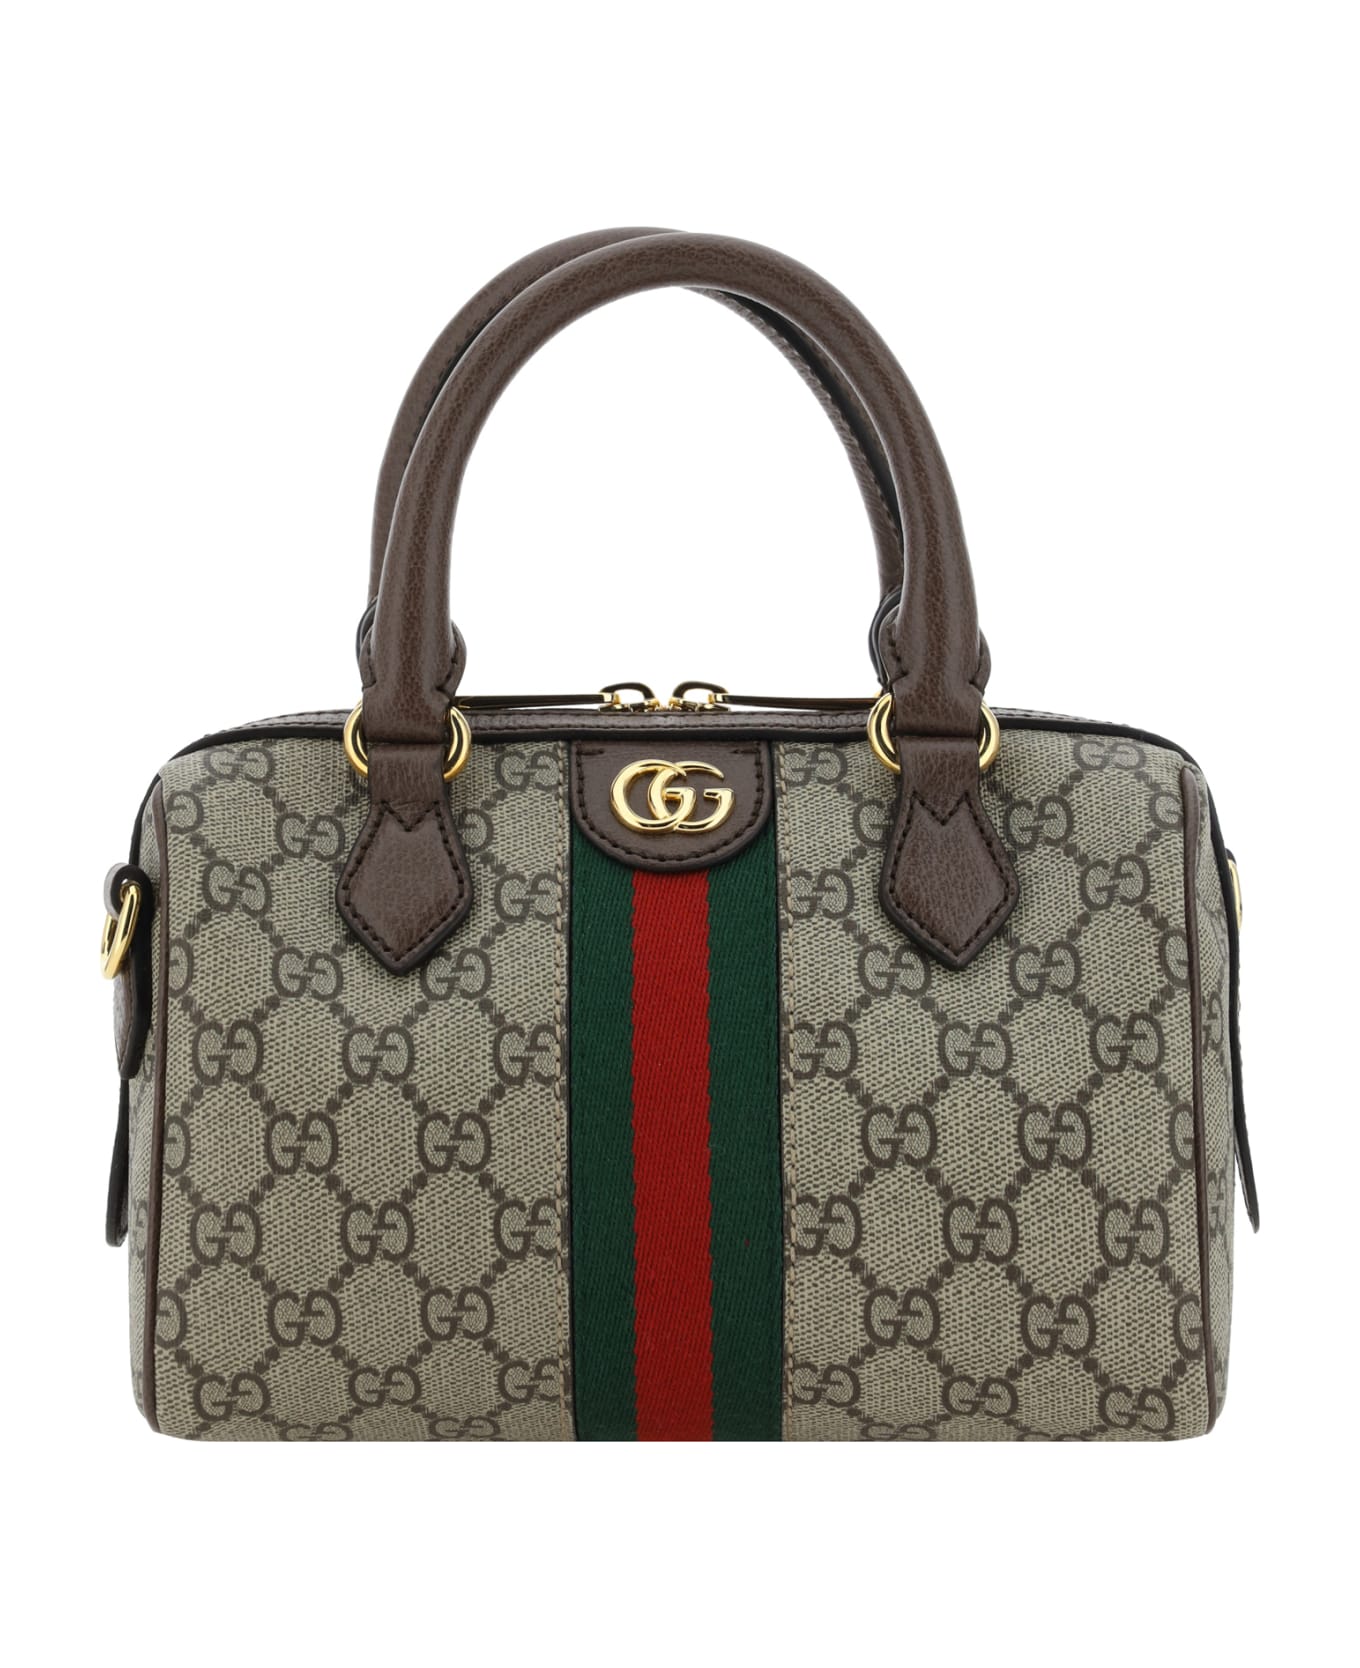 Gucci Ophidia Handbag - Ebony/acero